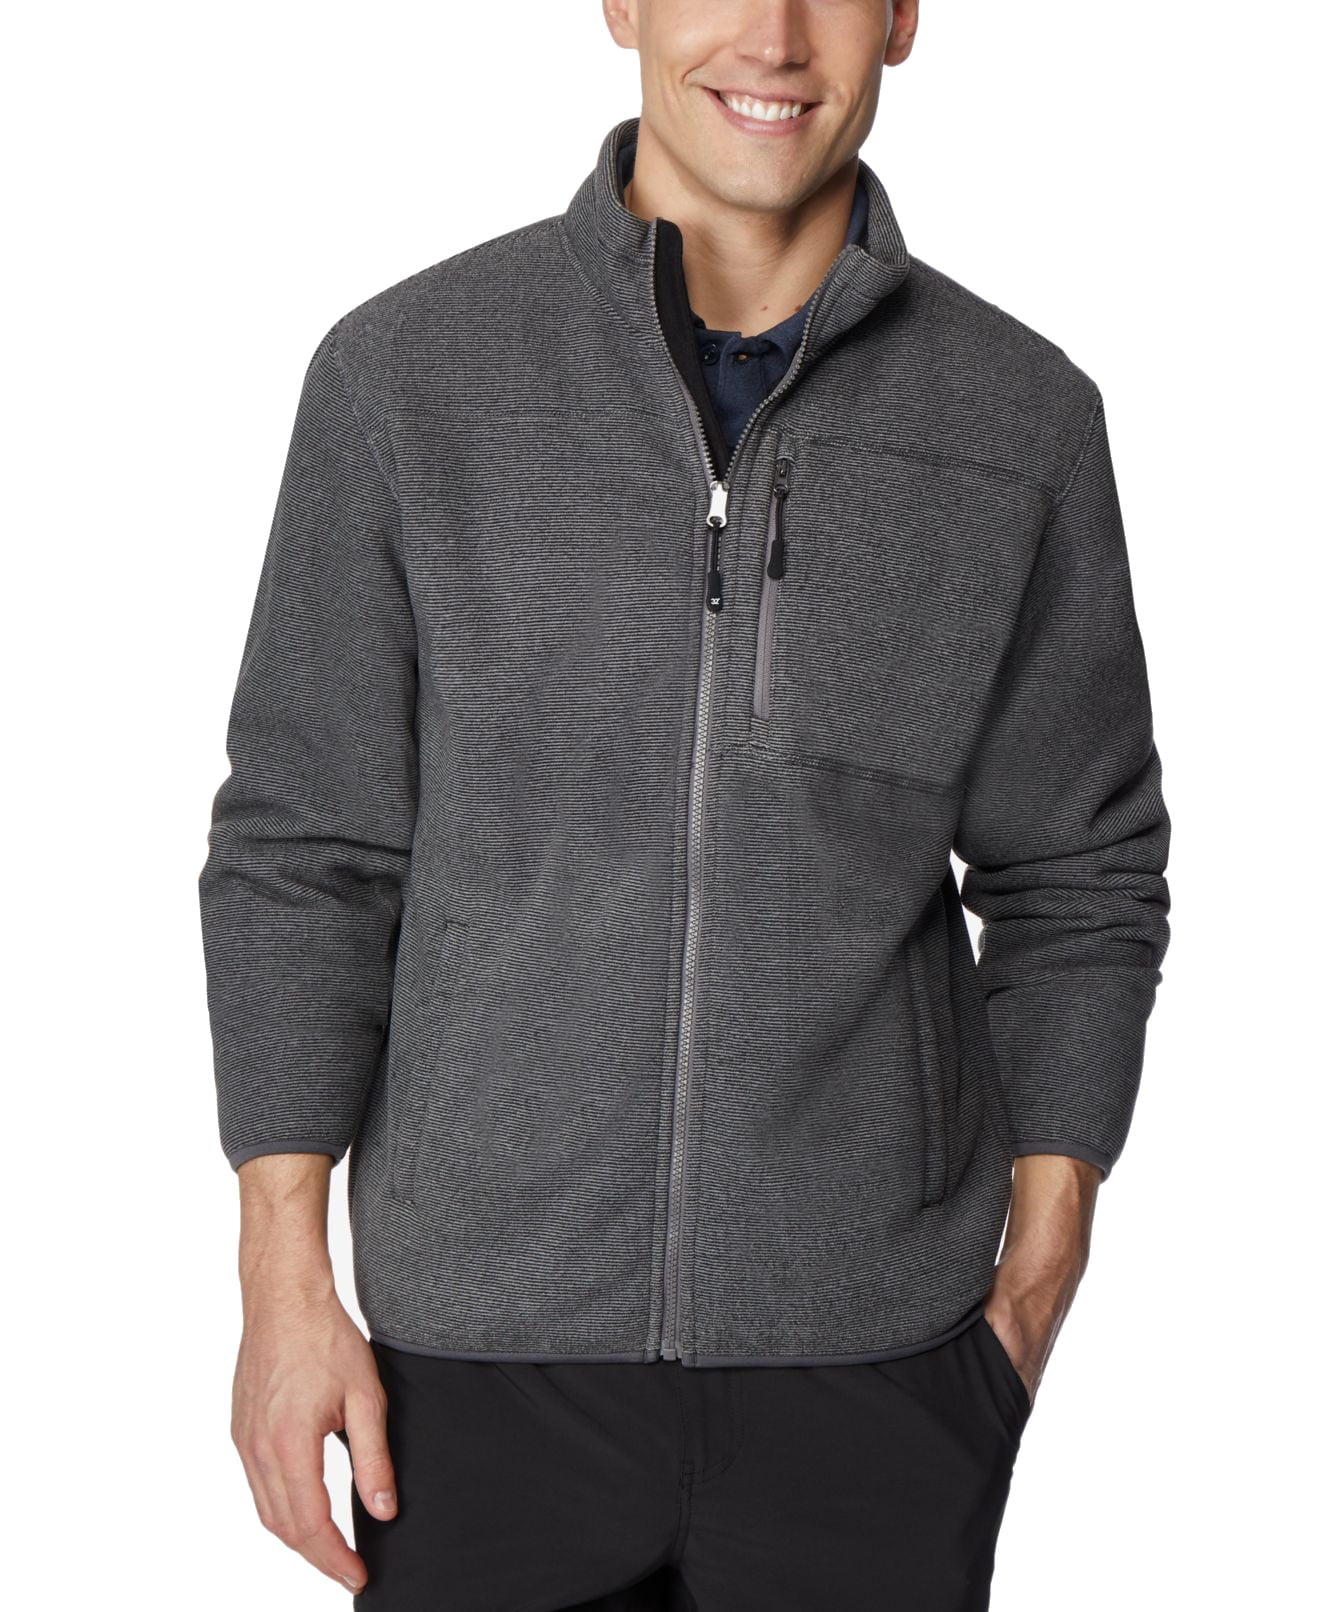 32 Degrees - Mens Sweater Small Full-Zip Fleece Jacket S - Walmart.com ...